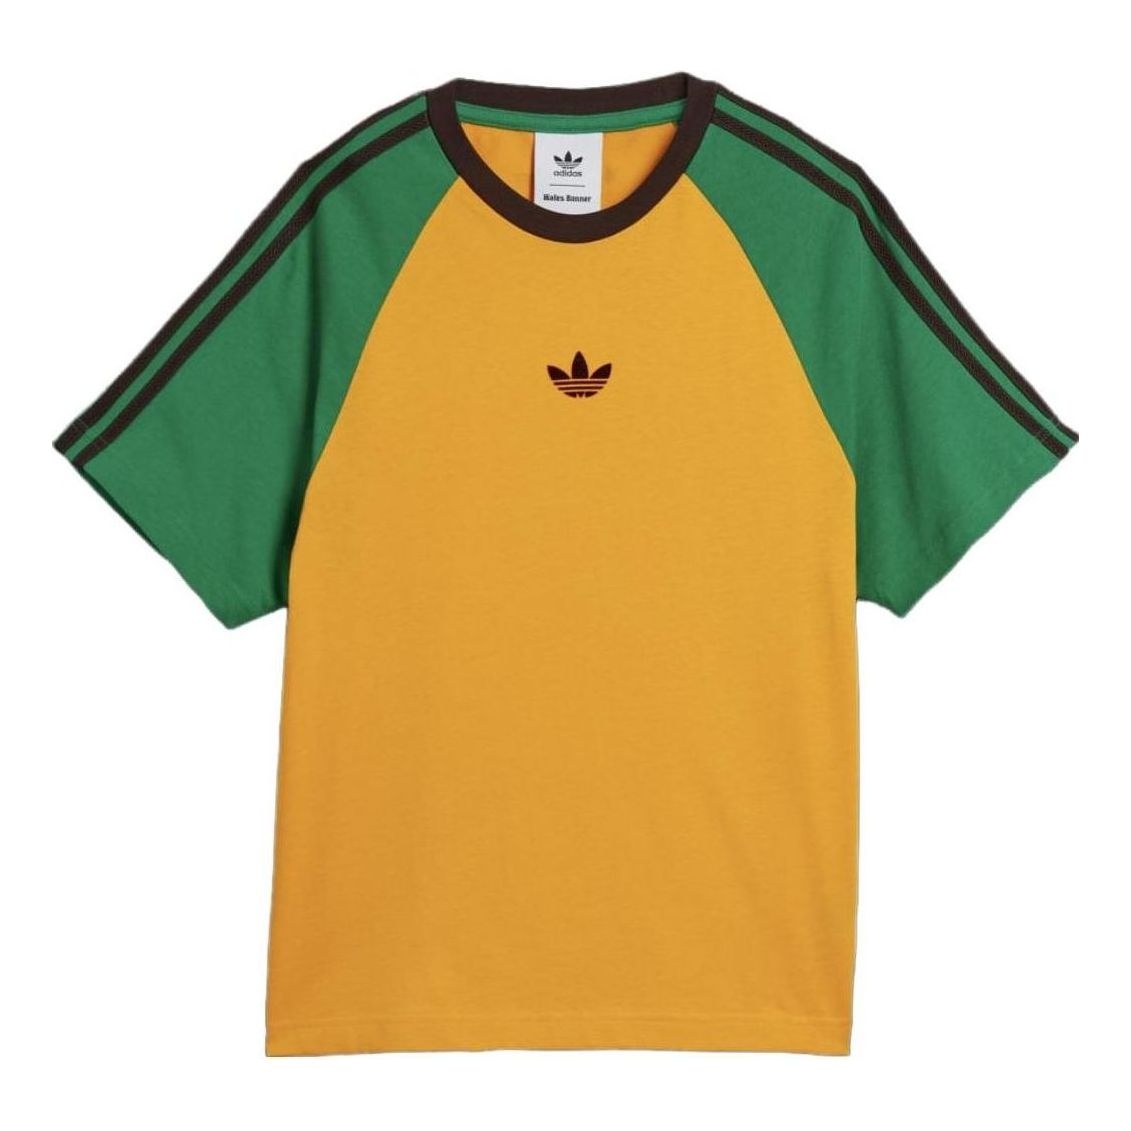 adidas x Wales Bonner Short Sleeve T-shirt 'Collegiate Gold' IJ8353 - 1